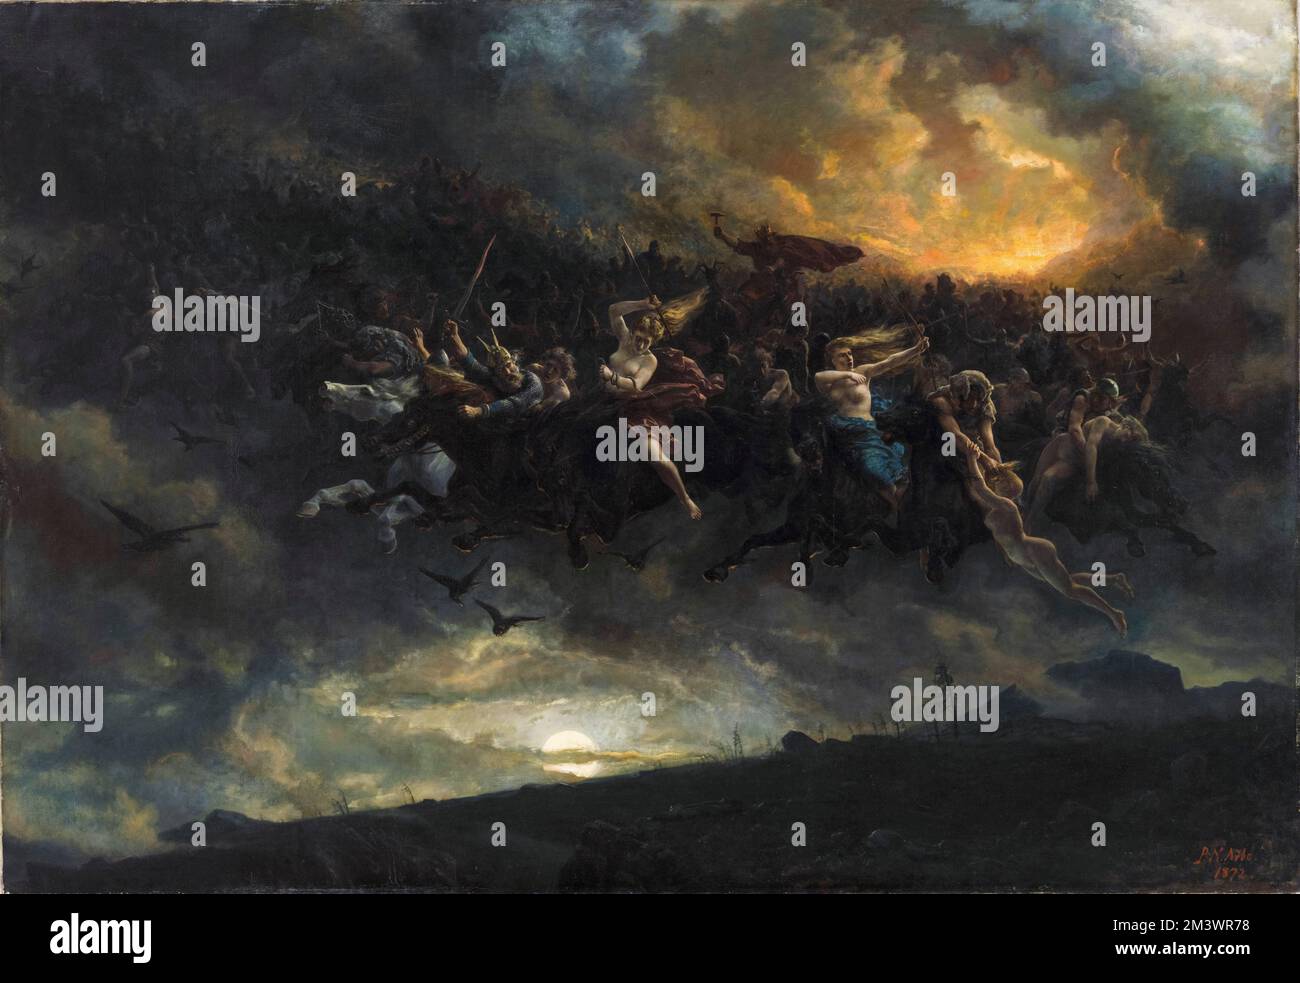 Peter Nicolai Arbo Gemälde, die wilde Jagd von Odin, Öl auf Leinwand, 1872 Stockfoto